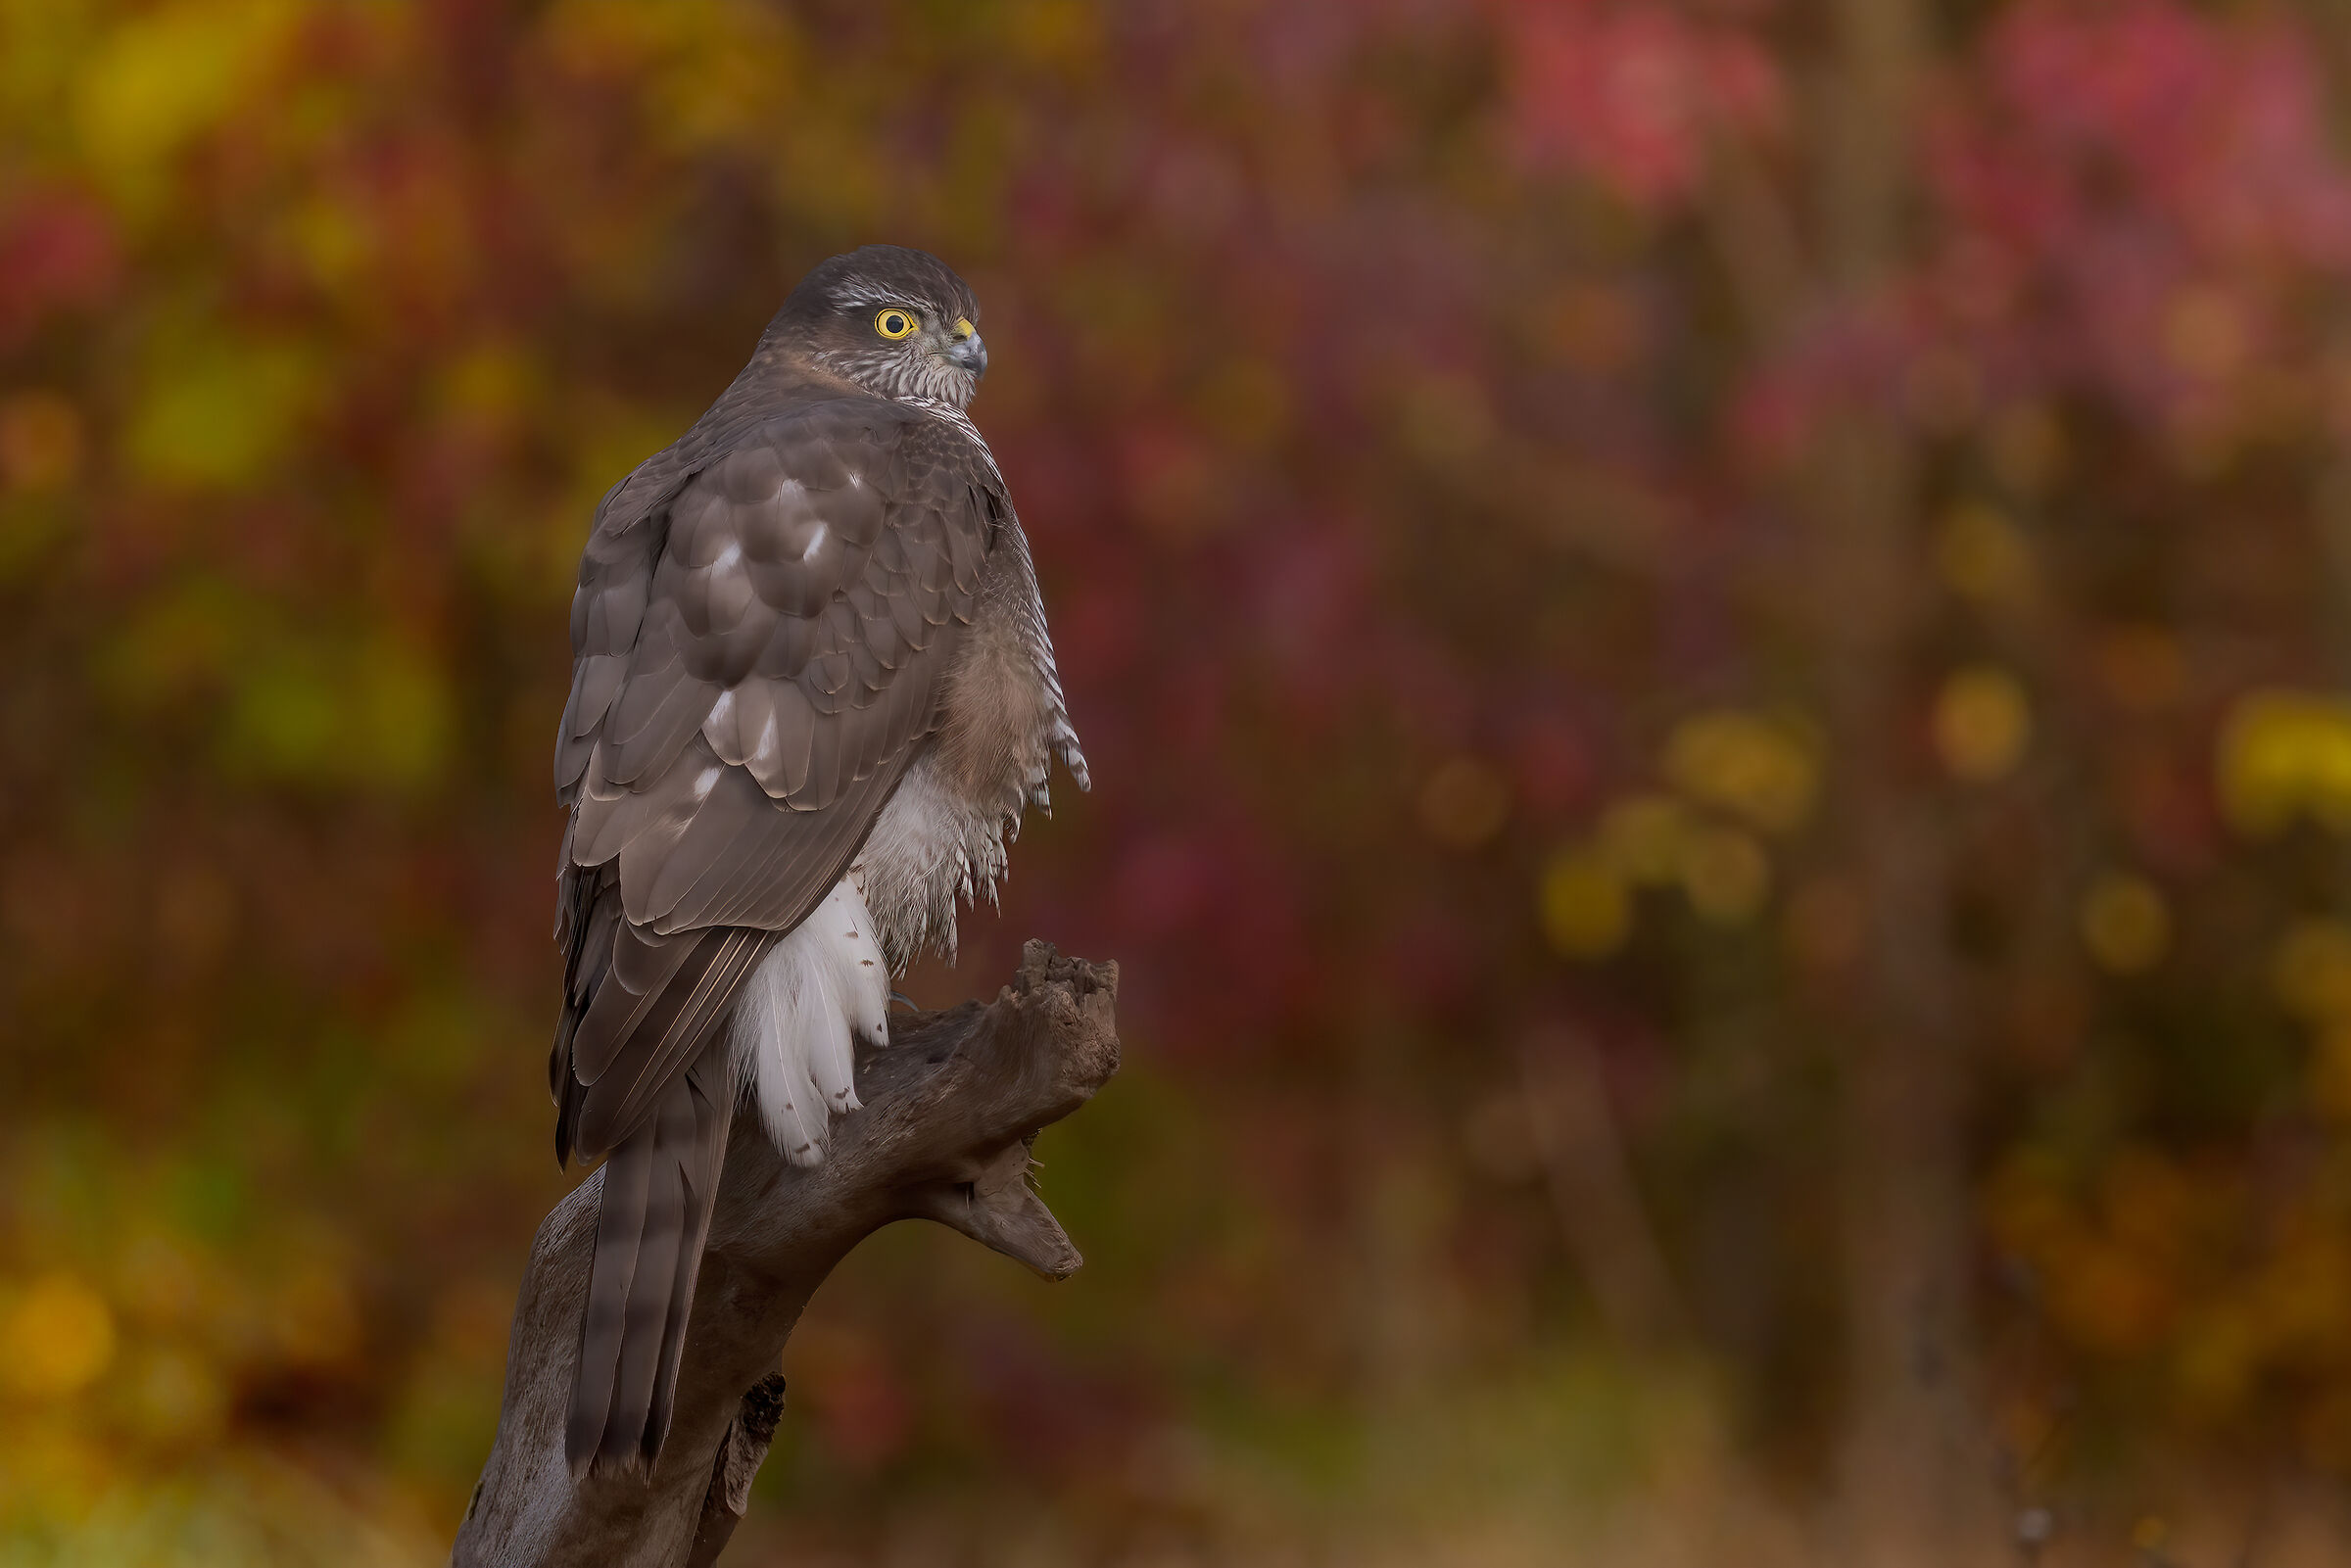 Sparrowhawk on autumn background...